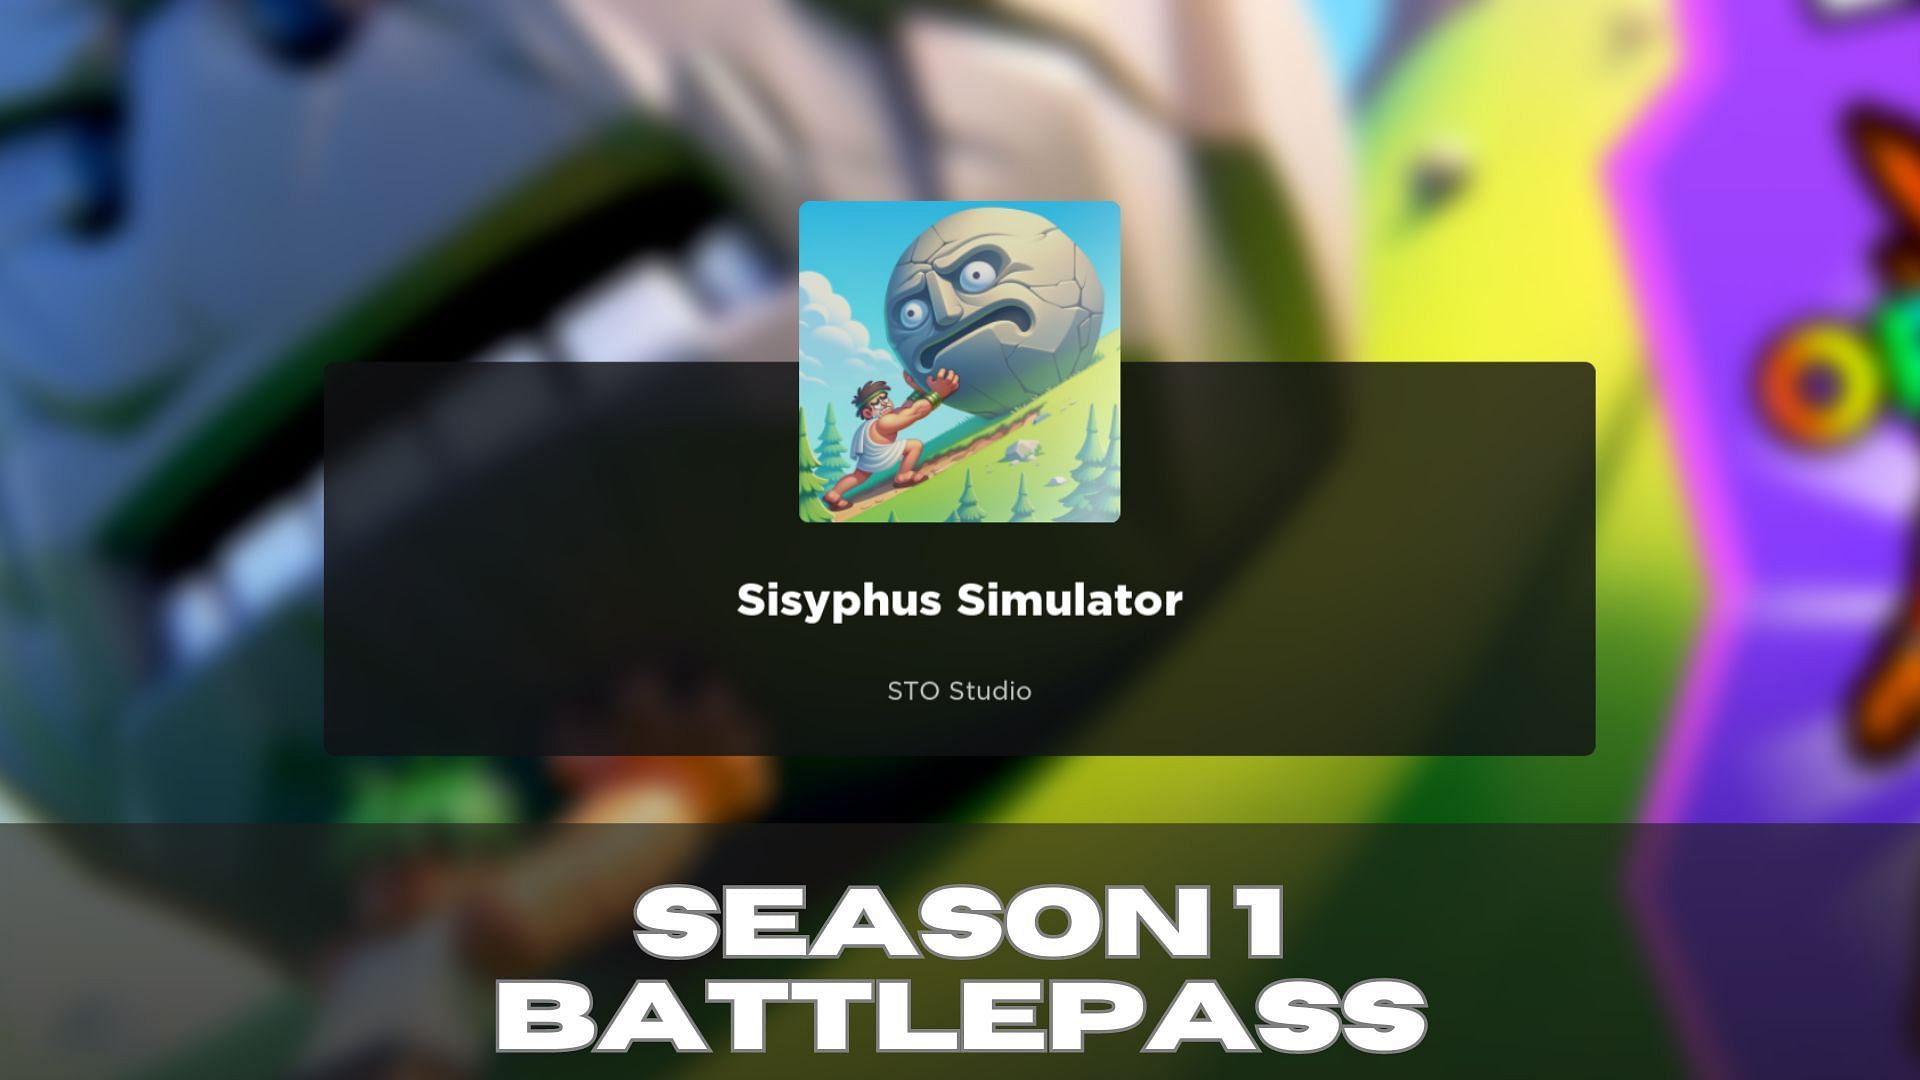 Season 1 Battlepass in Sisyphus Simulator